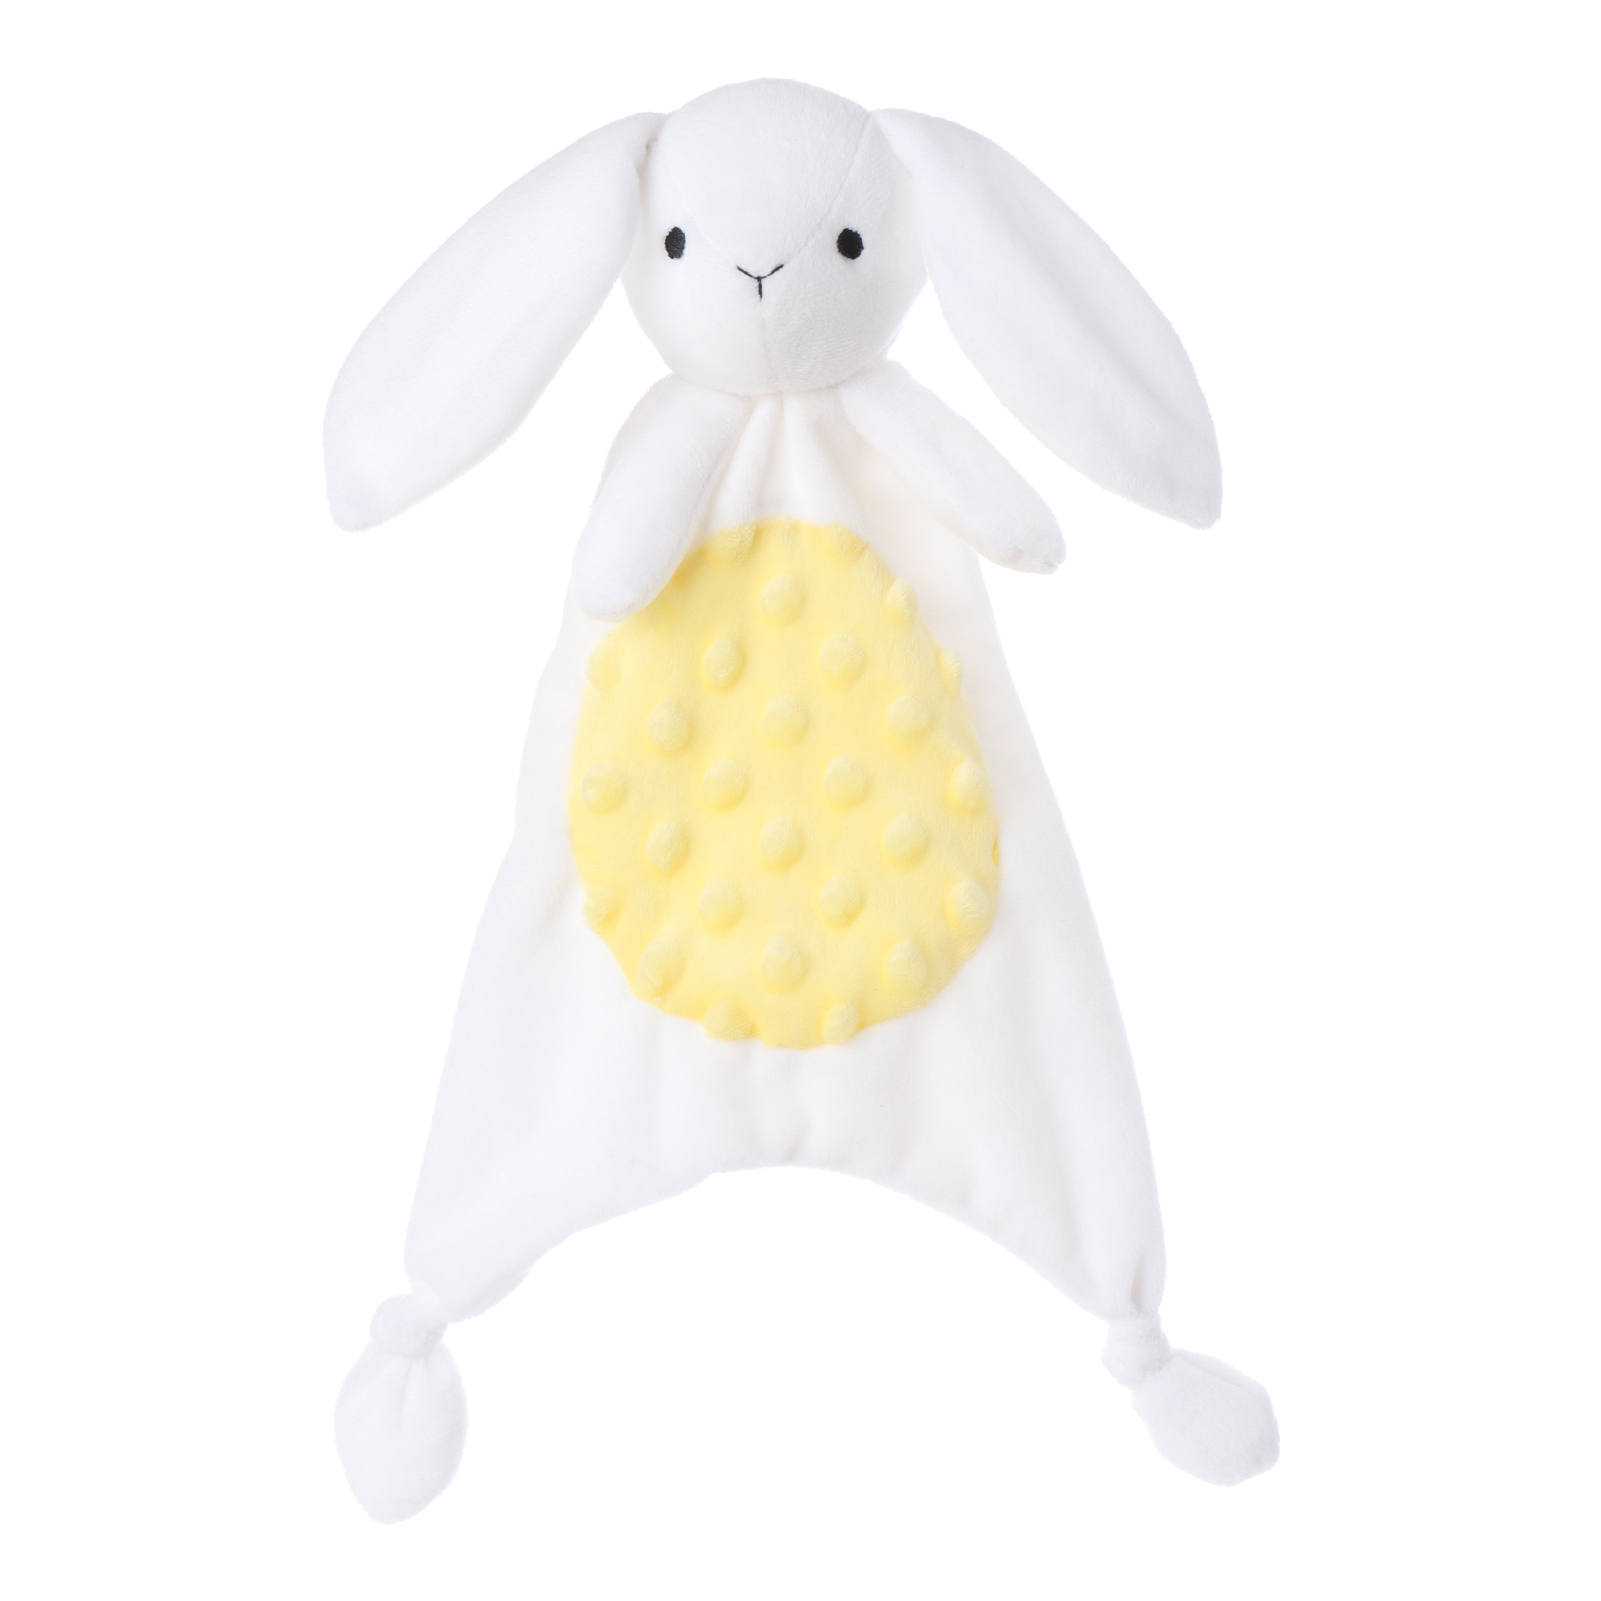 Apicot Lamb Plussh Toy Bub-Bunny Security Blanket Baby Lovey Stuffed Animal